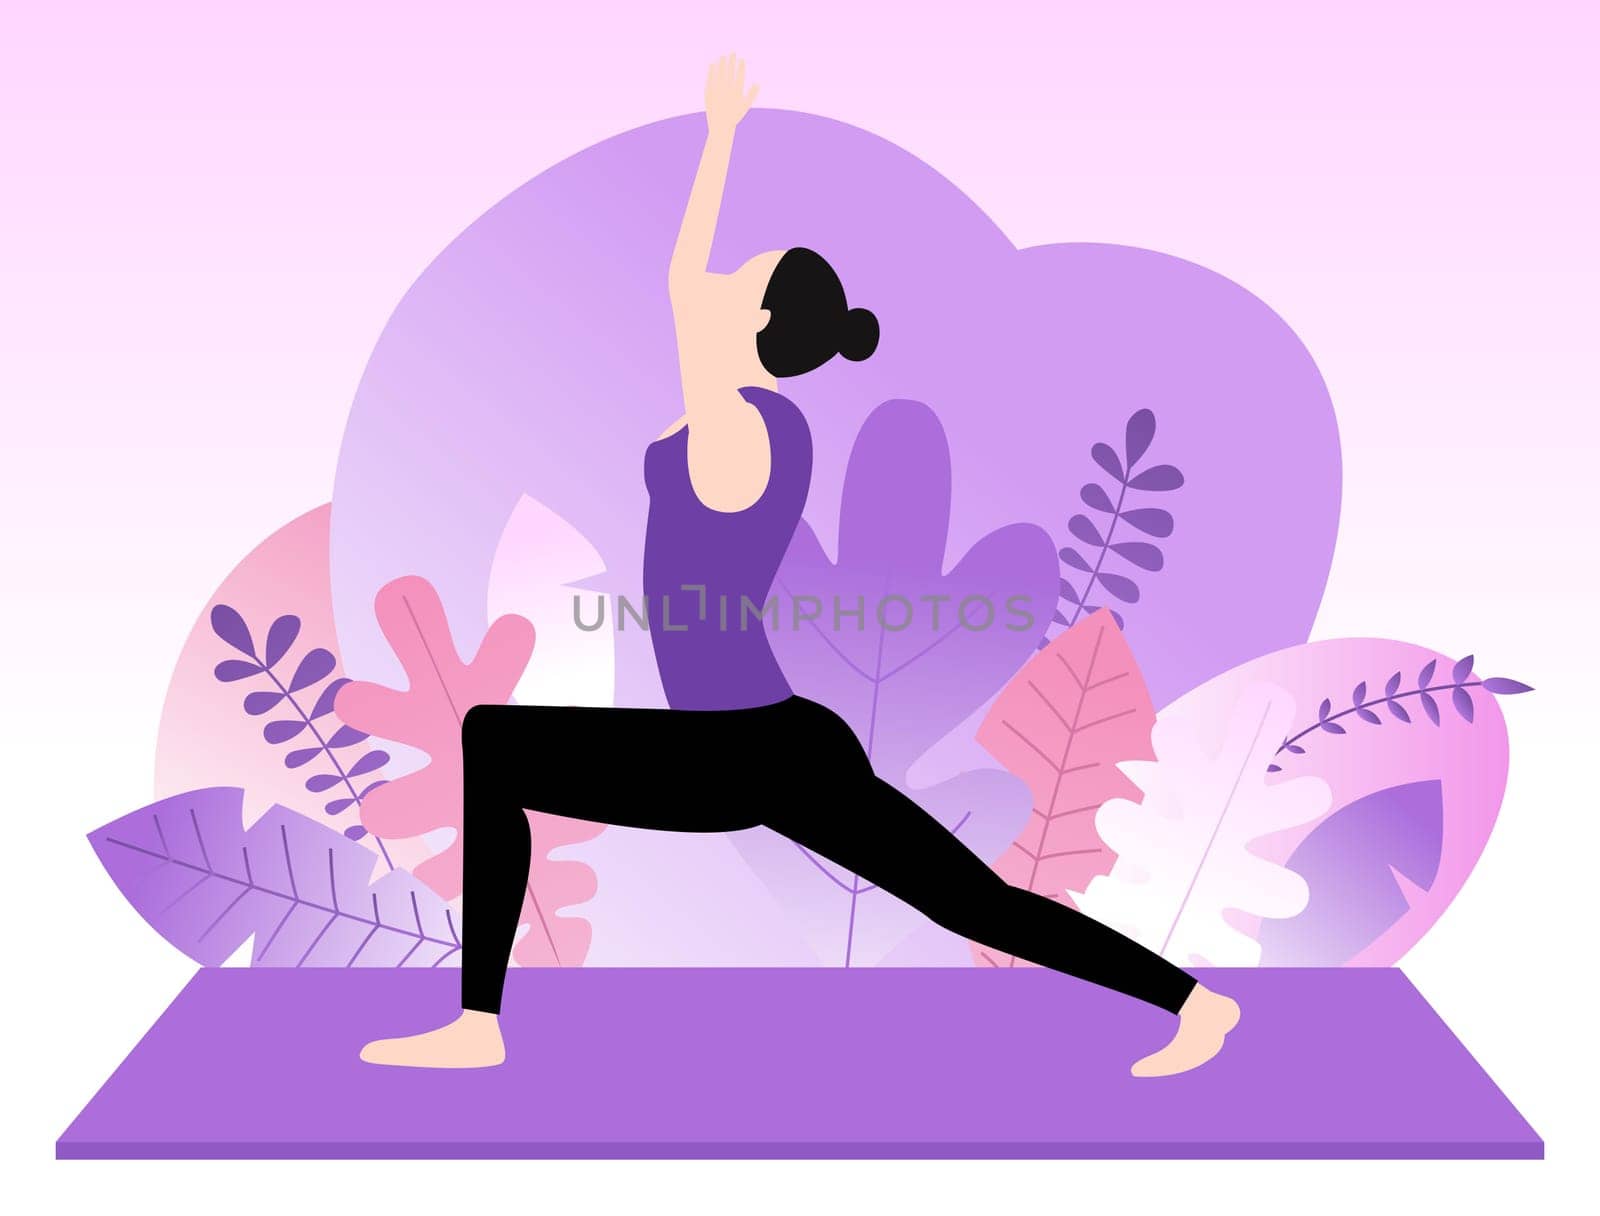 sports,lunge,stretching,pilates,silhouette,yoga,purple,balance,exercise,illustration,leg,pink by ogqcorp